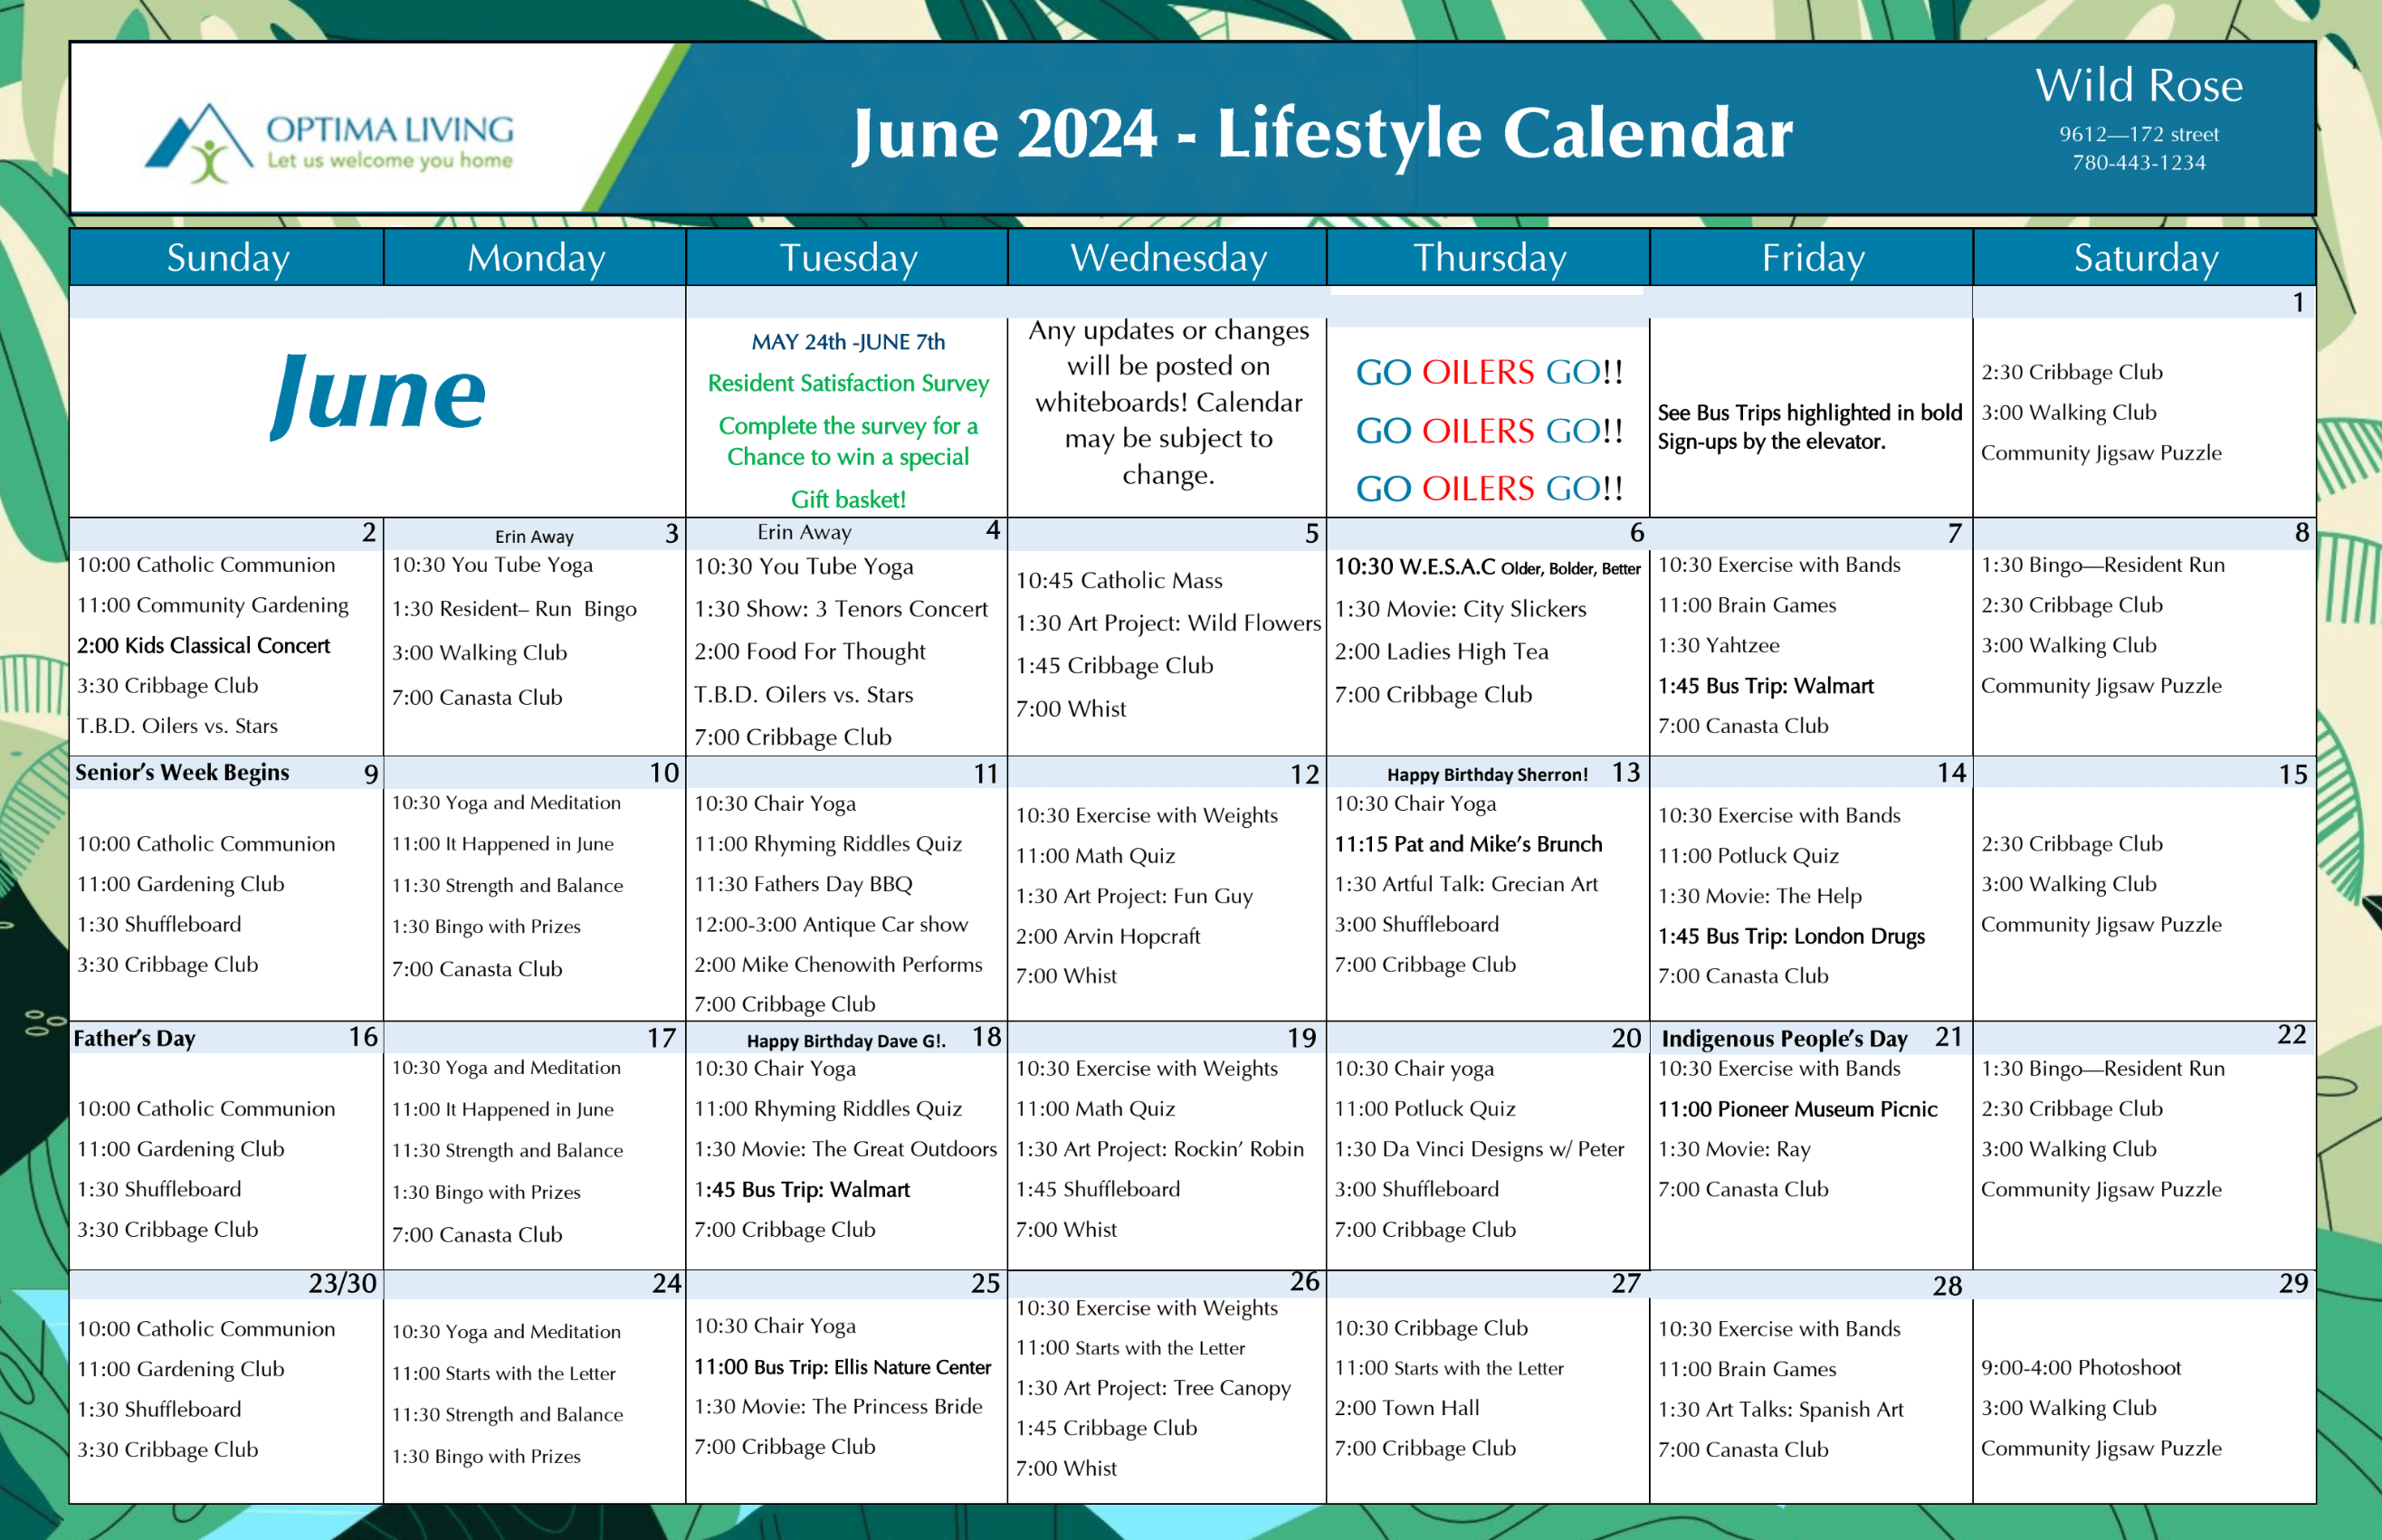 Wild Rose June 2024 event calendar